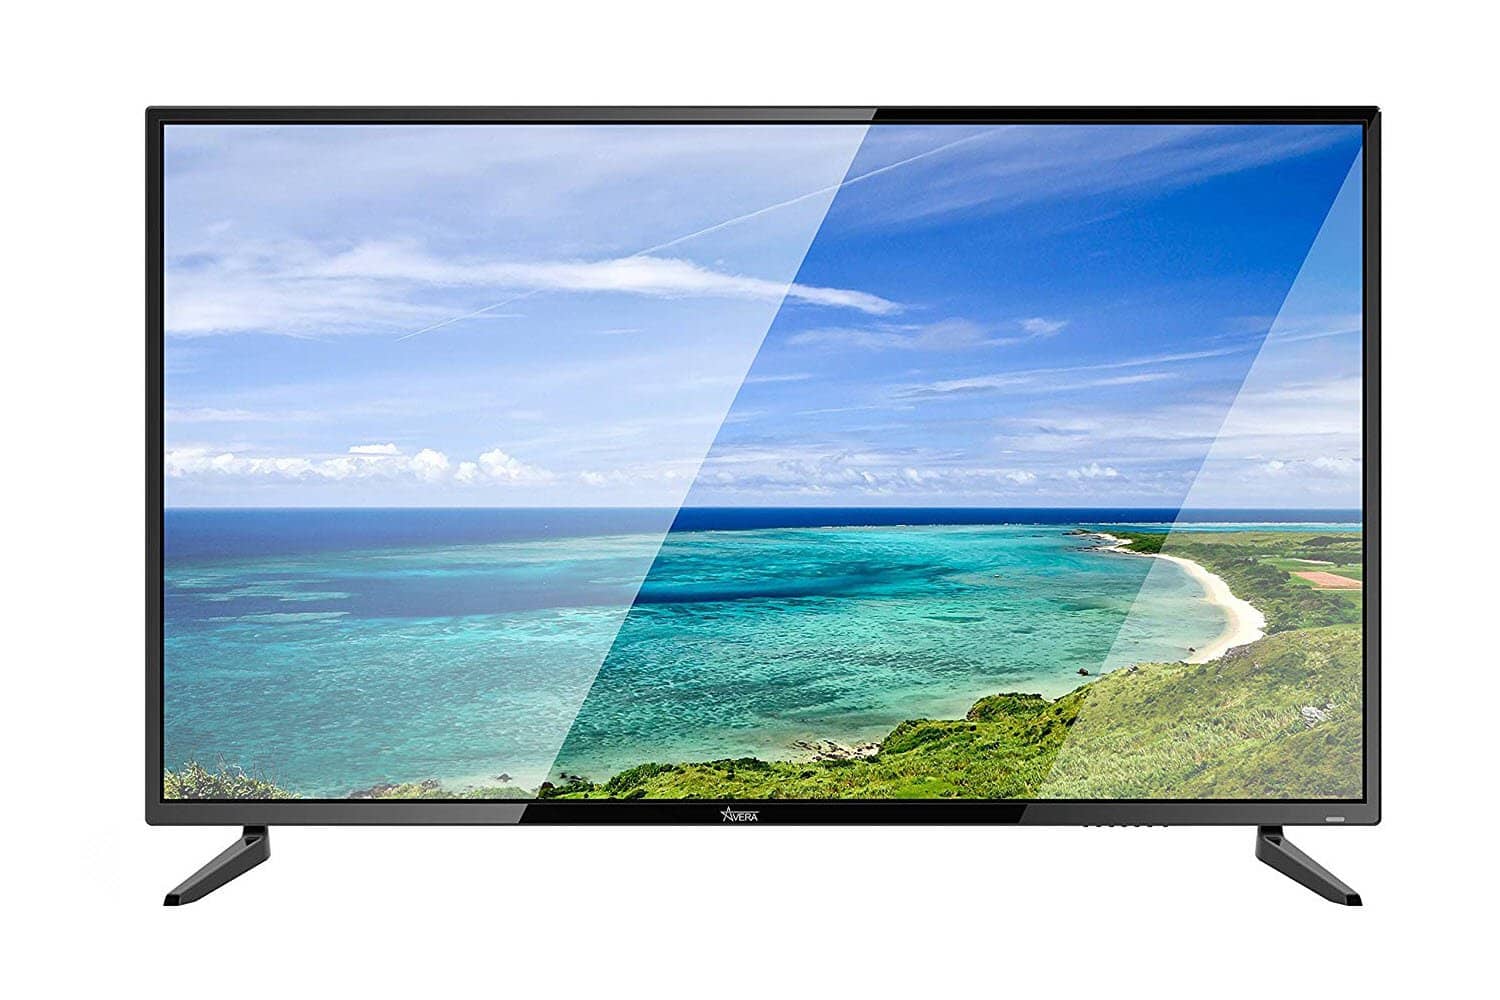 Avera 55EQX20 55-Inch 4K Ultra HD LED TV